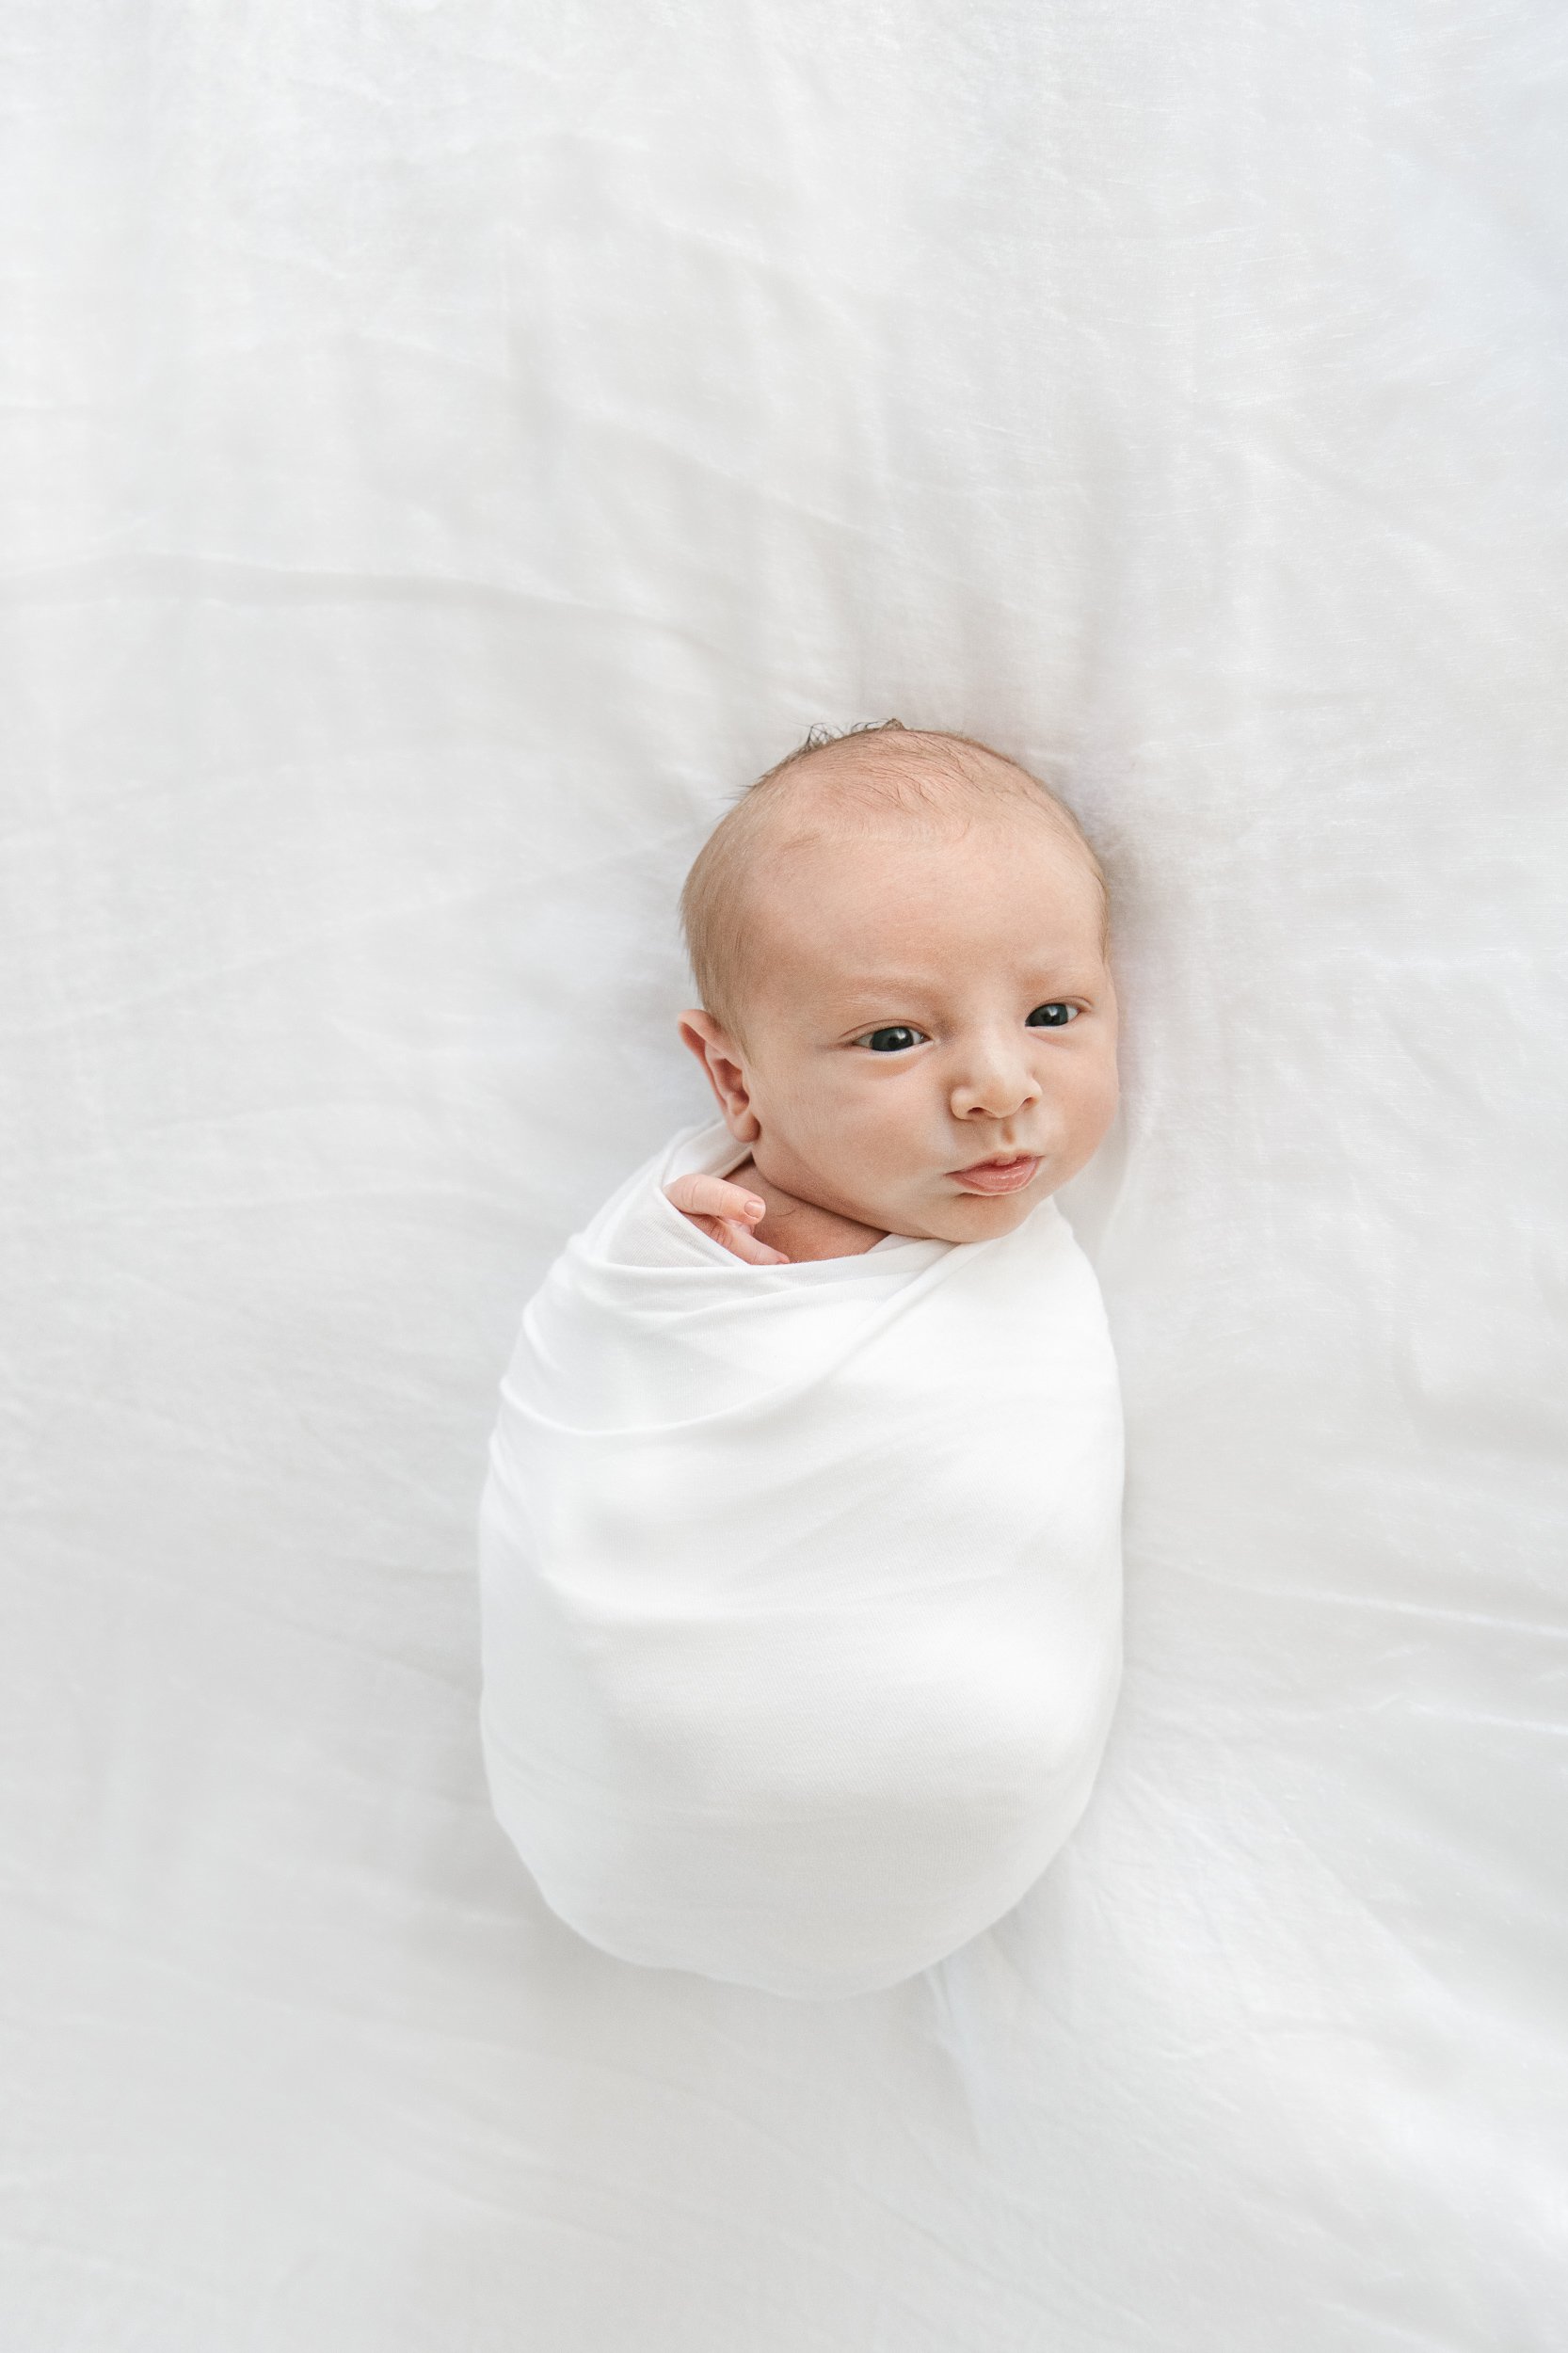  Baby boy swaddled up for a modern newborn photography session with Nicole Hawkins Photography. modern newborns #NicoleHawkinsPhotography #InHomeNewborn #JerseyShoreNewborn #MontclairPhotographers #NewbornPhotography #baby #newborn 